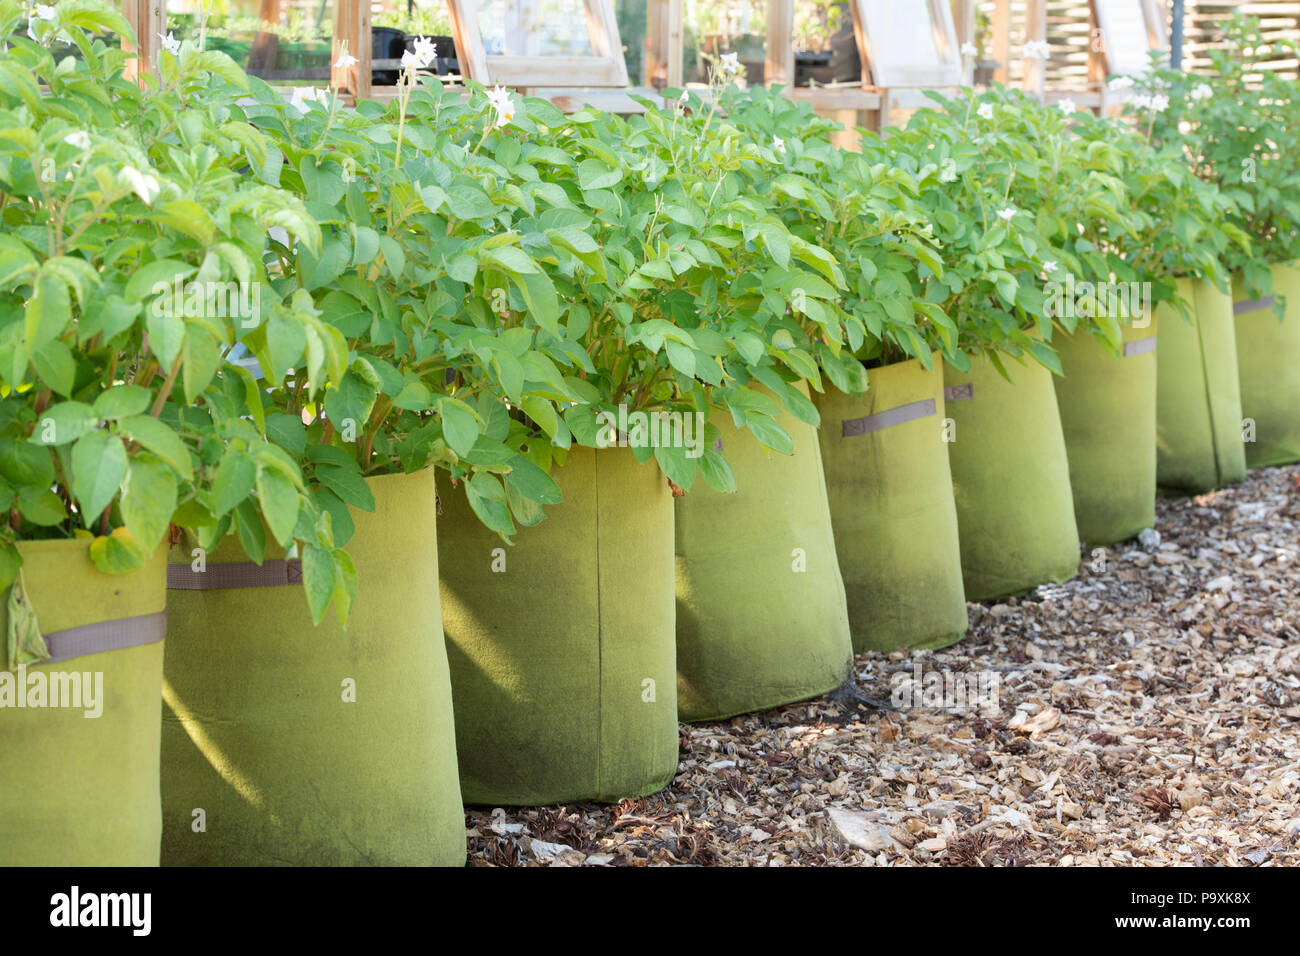 https://c8.alamy.com/comp/P9XK8X/solanum-tuberosum-growing-potatoes-in-grow-bags-uk-P9XK8X.jpg